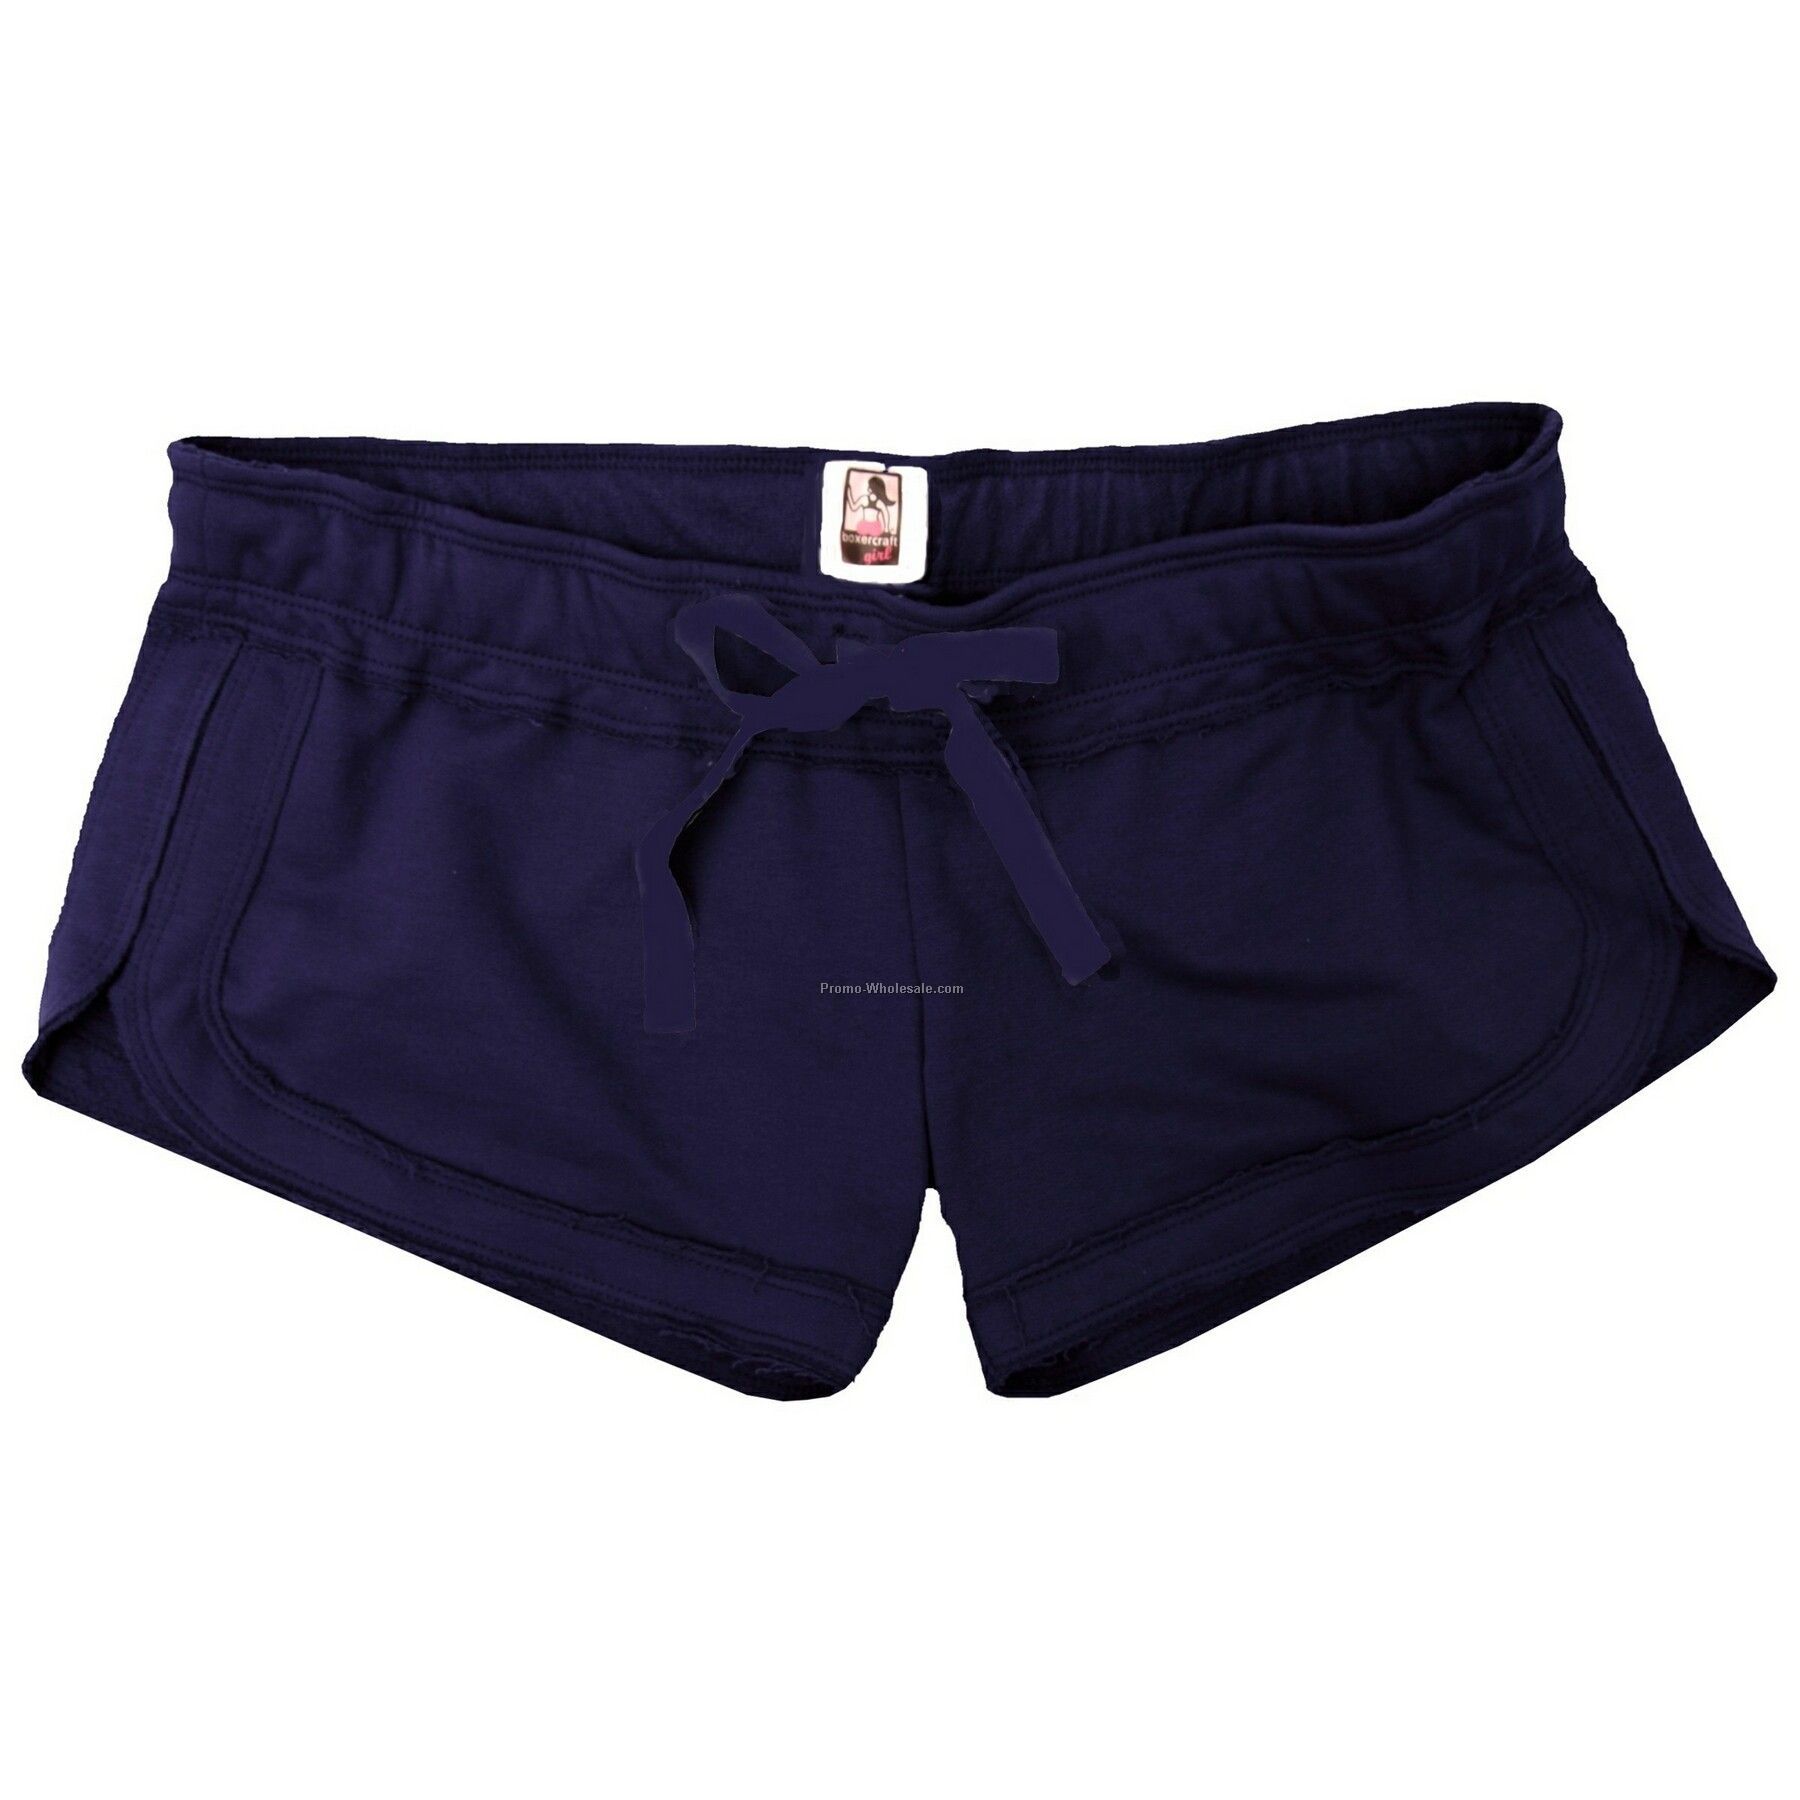 Adults' Navy Blue Chrissy Shorts (Xs-xl)